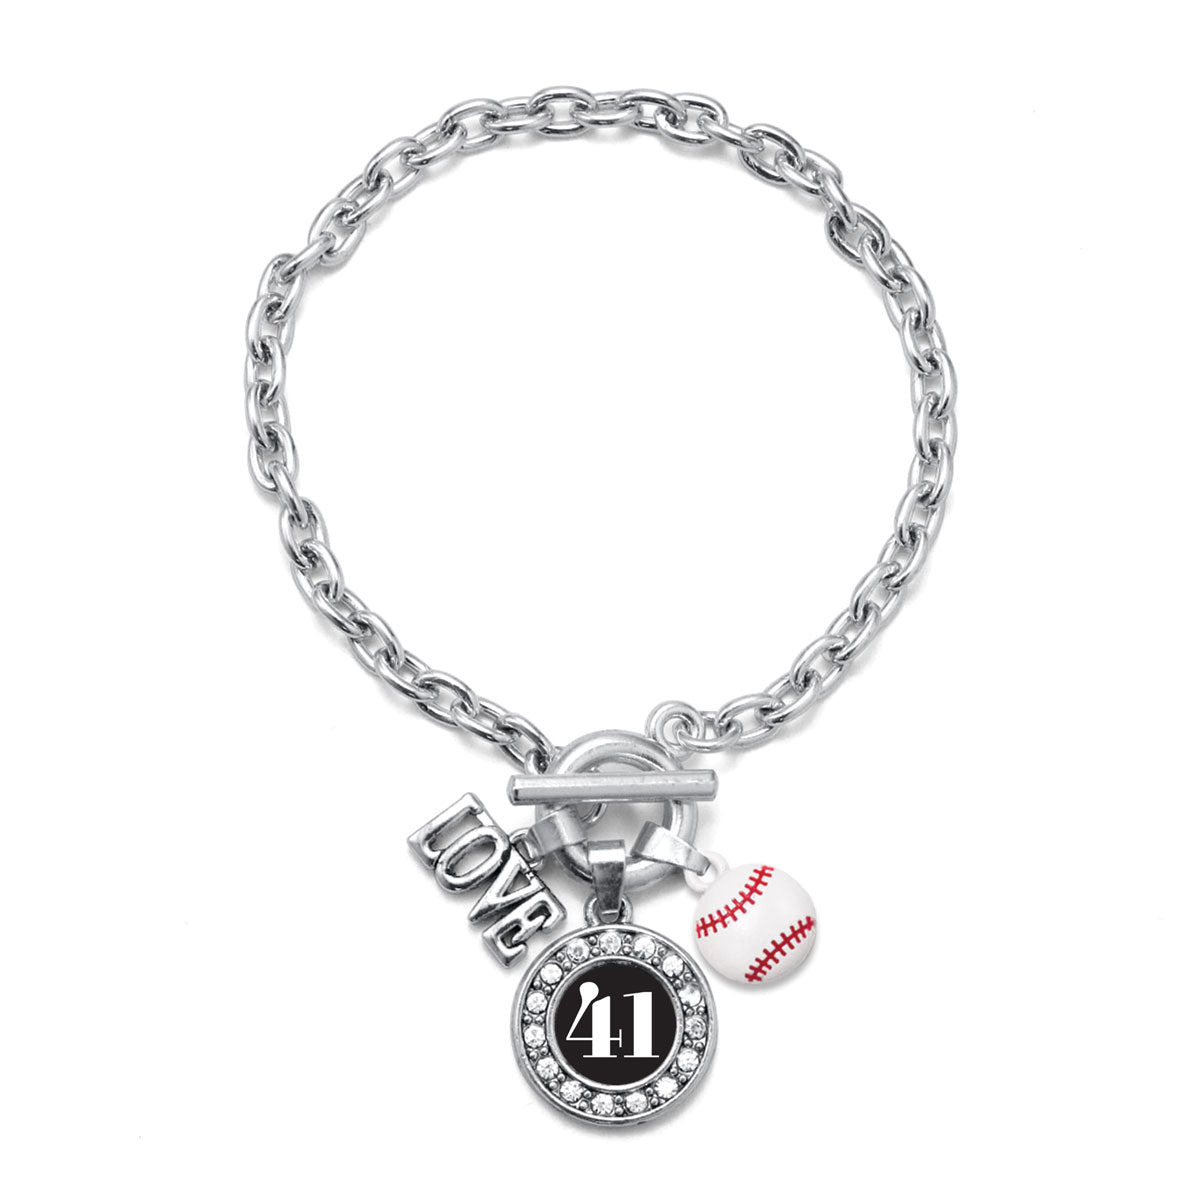 Silver Baseball - Sports Number 41 Circle Charm Toggle Bracelet